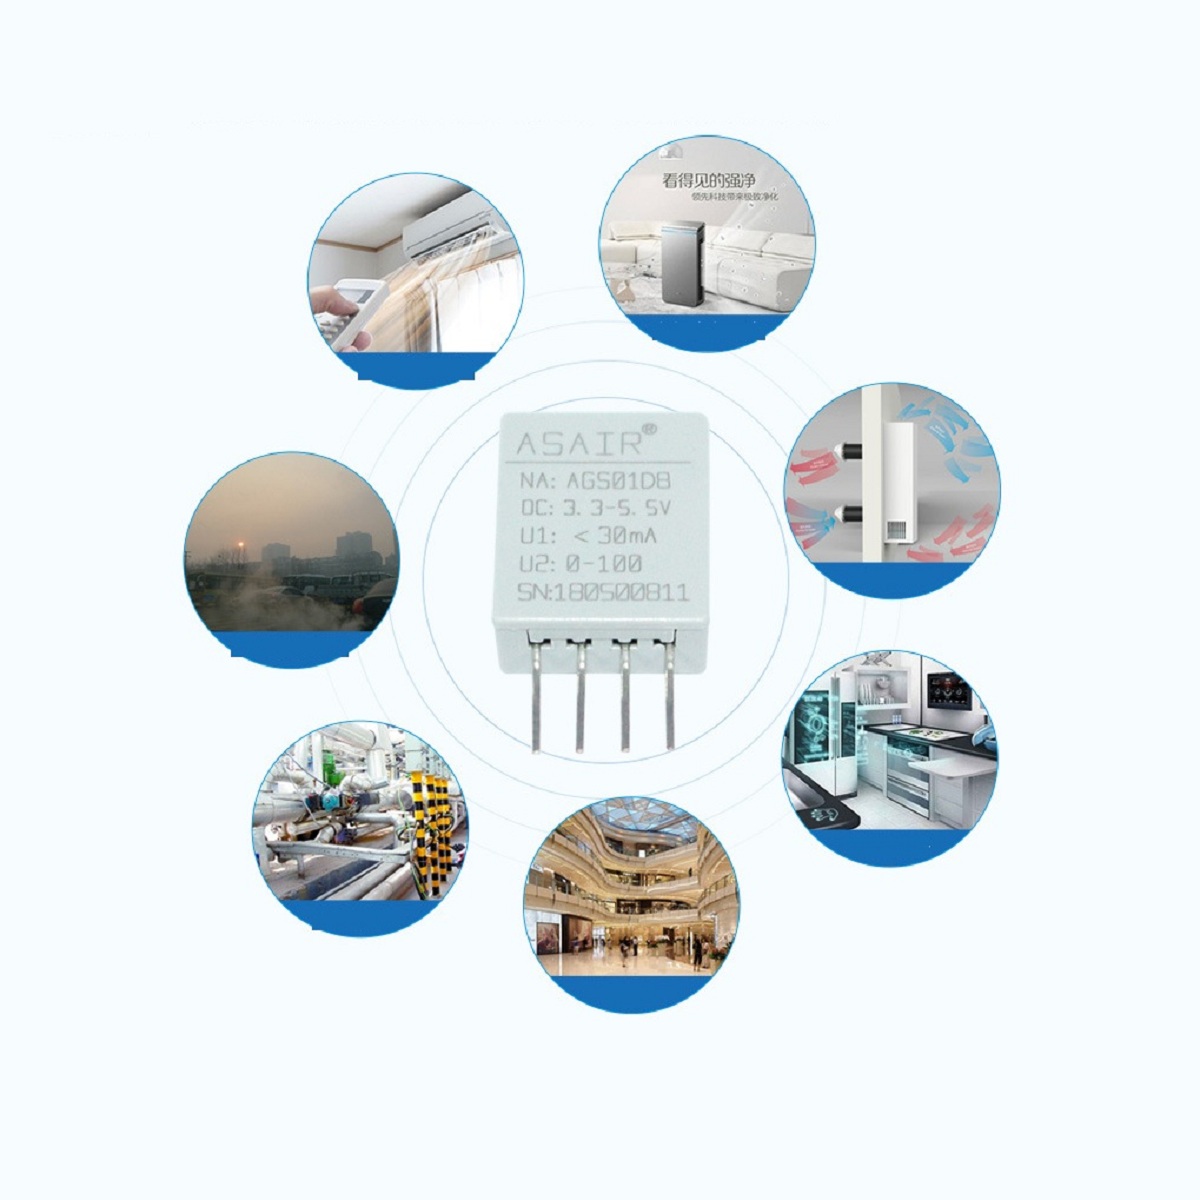 AGS01DB-Air-Quality-Sensor-MEMS-Technology-of-VOC-Gas-Sensor-Module-1557260-1